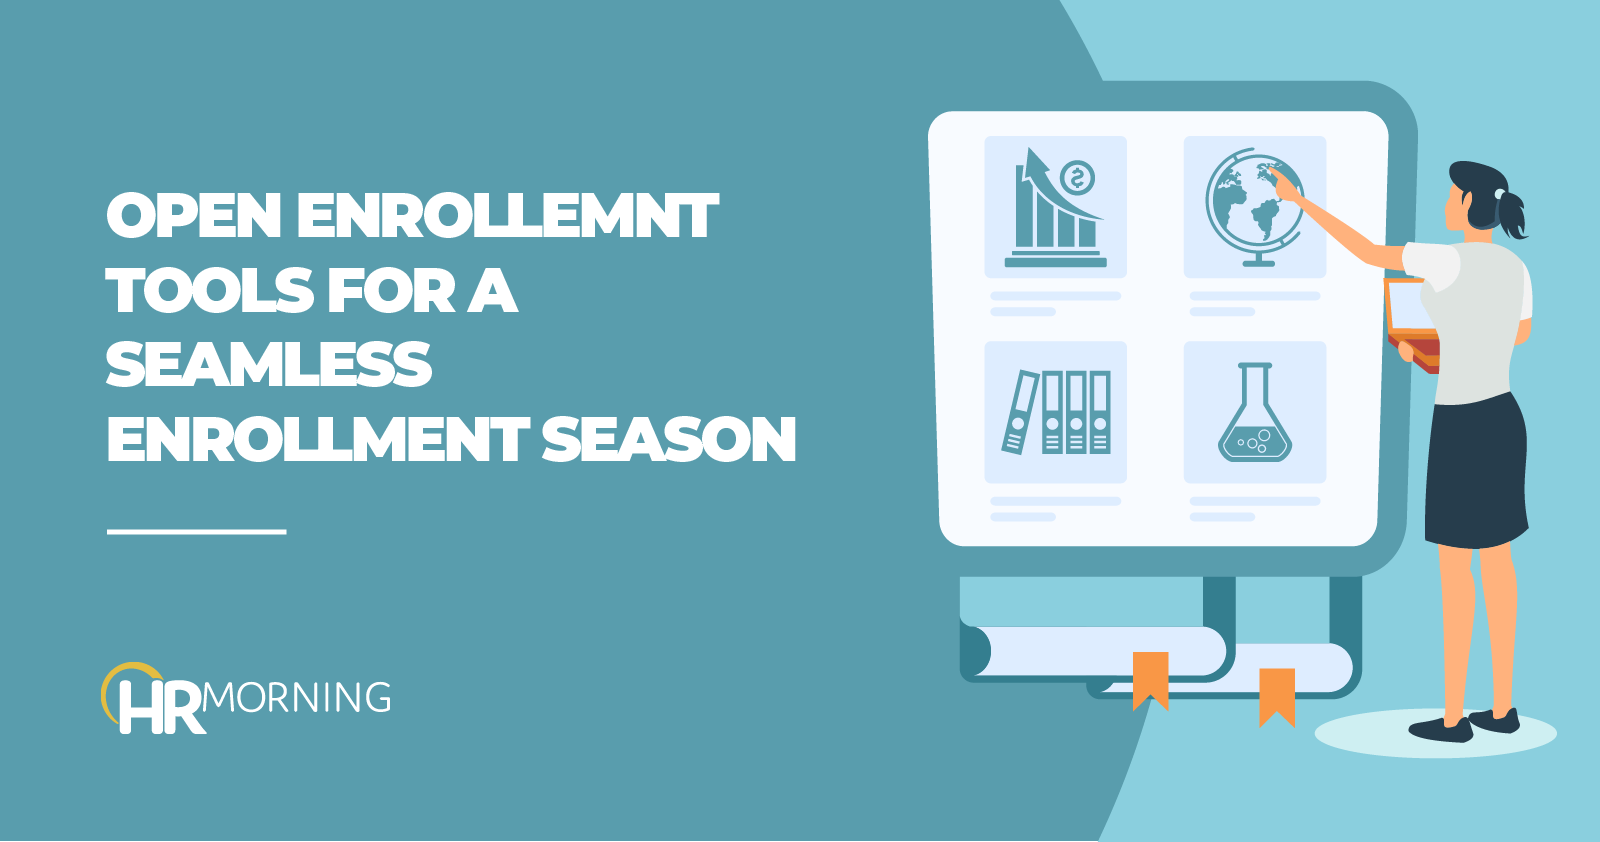 Open enrollemnt tools for a seamless enrollment season